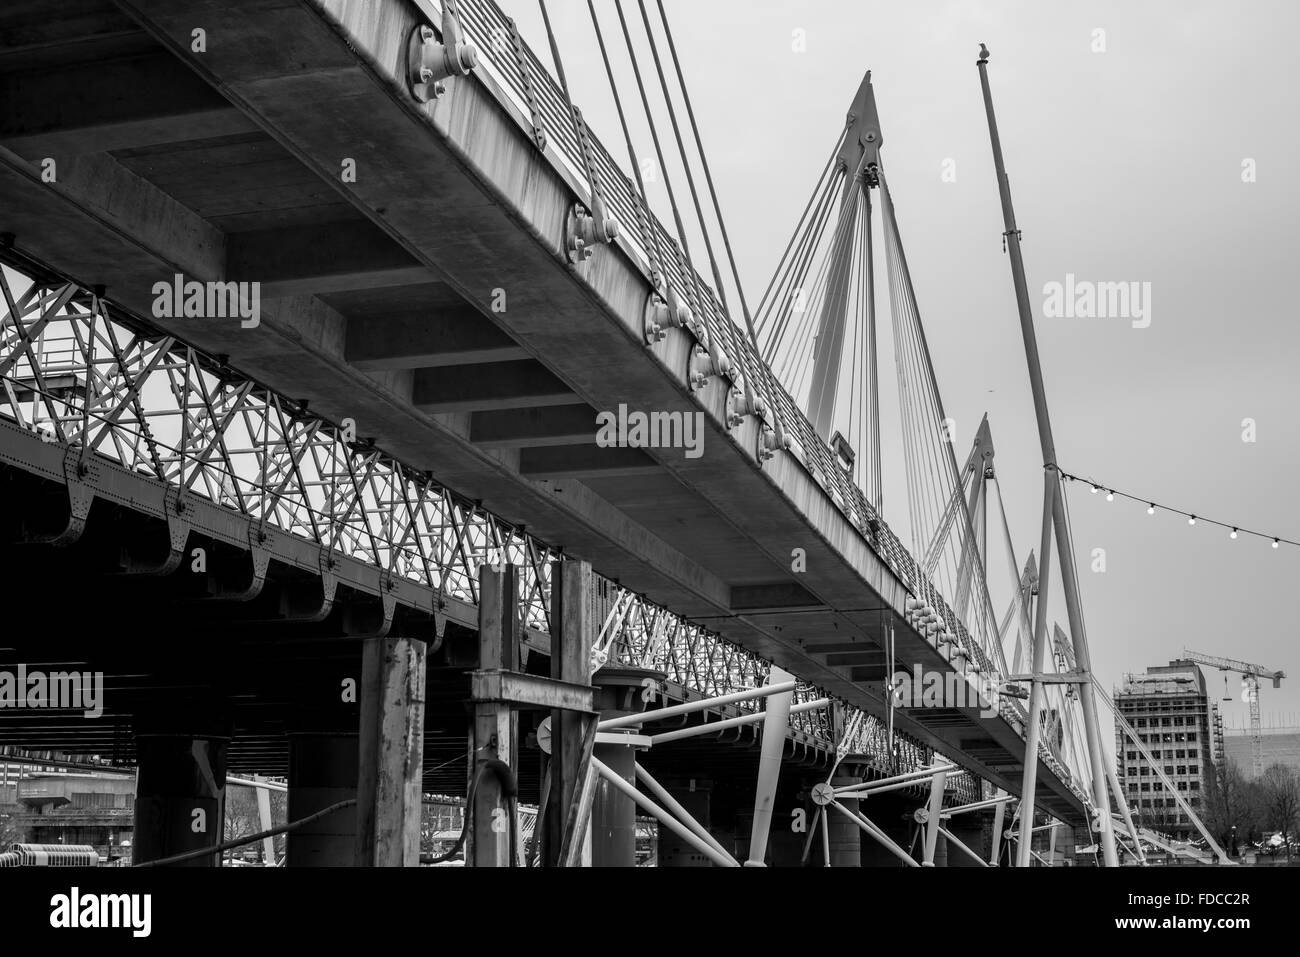 A shot of the golden jubilee bridge in London. Stock Photo